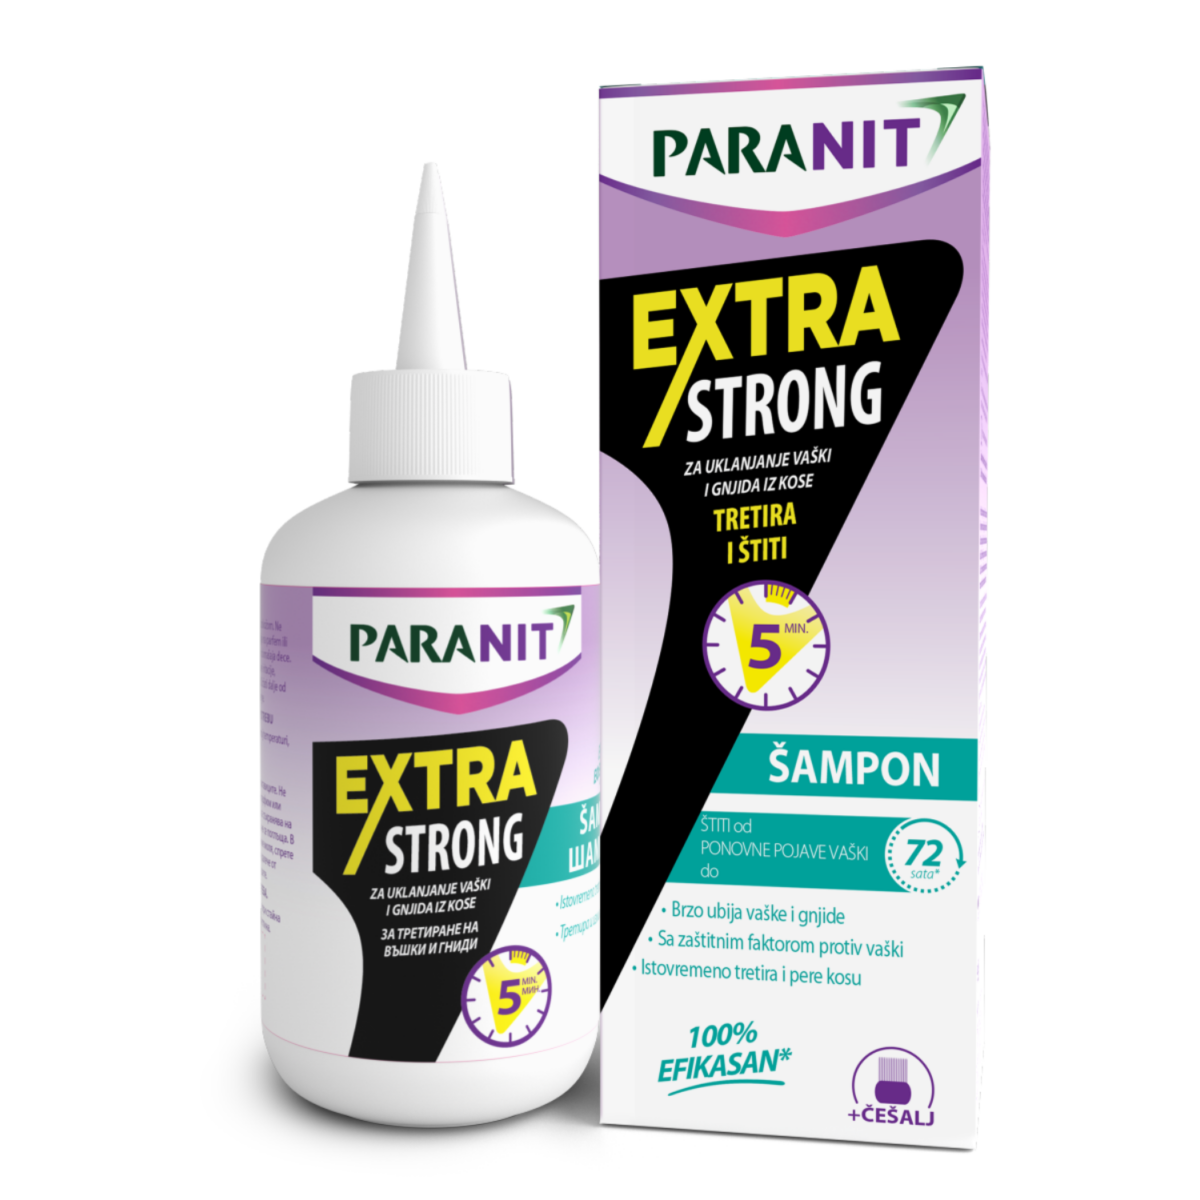 Paranit extra strong šampon protiv vaški + češalj 200ml